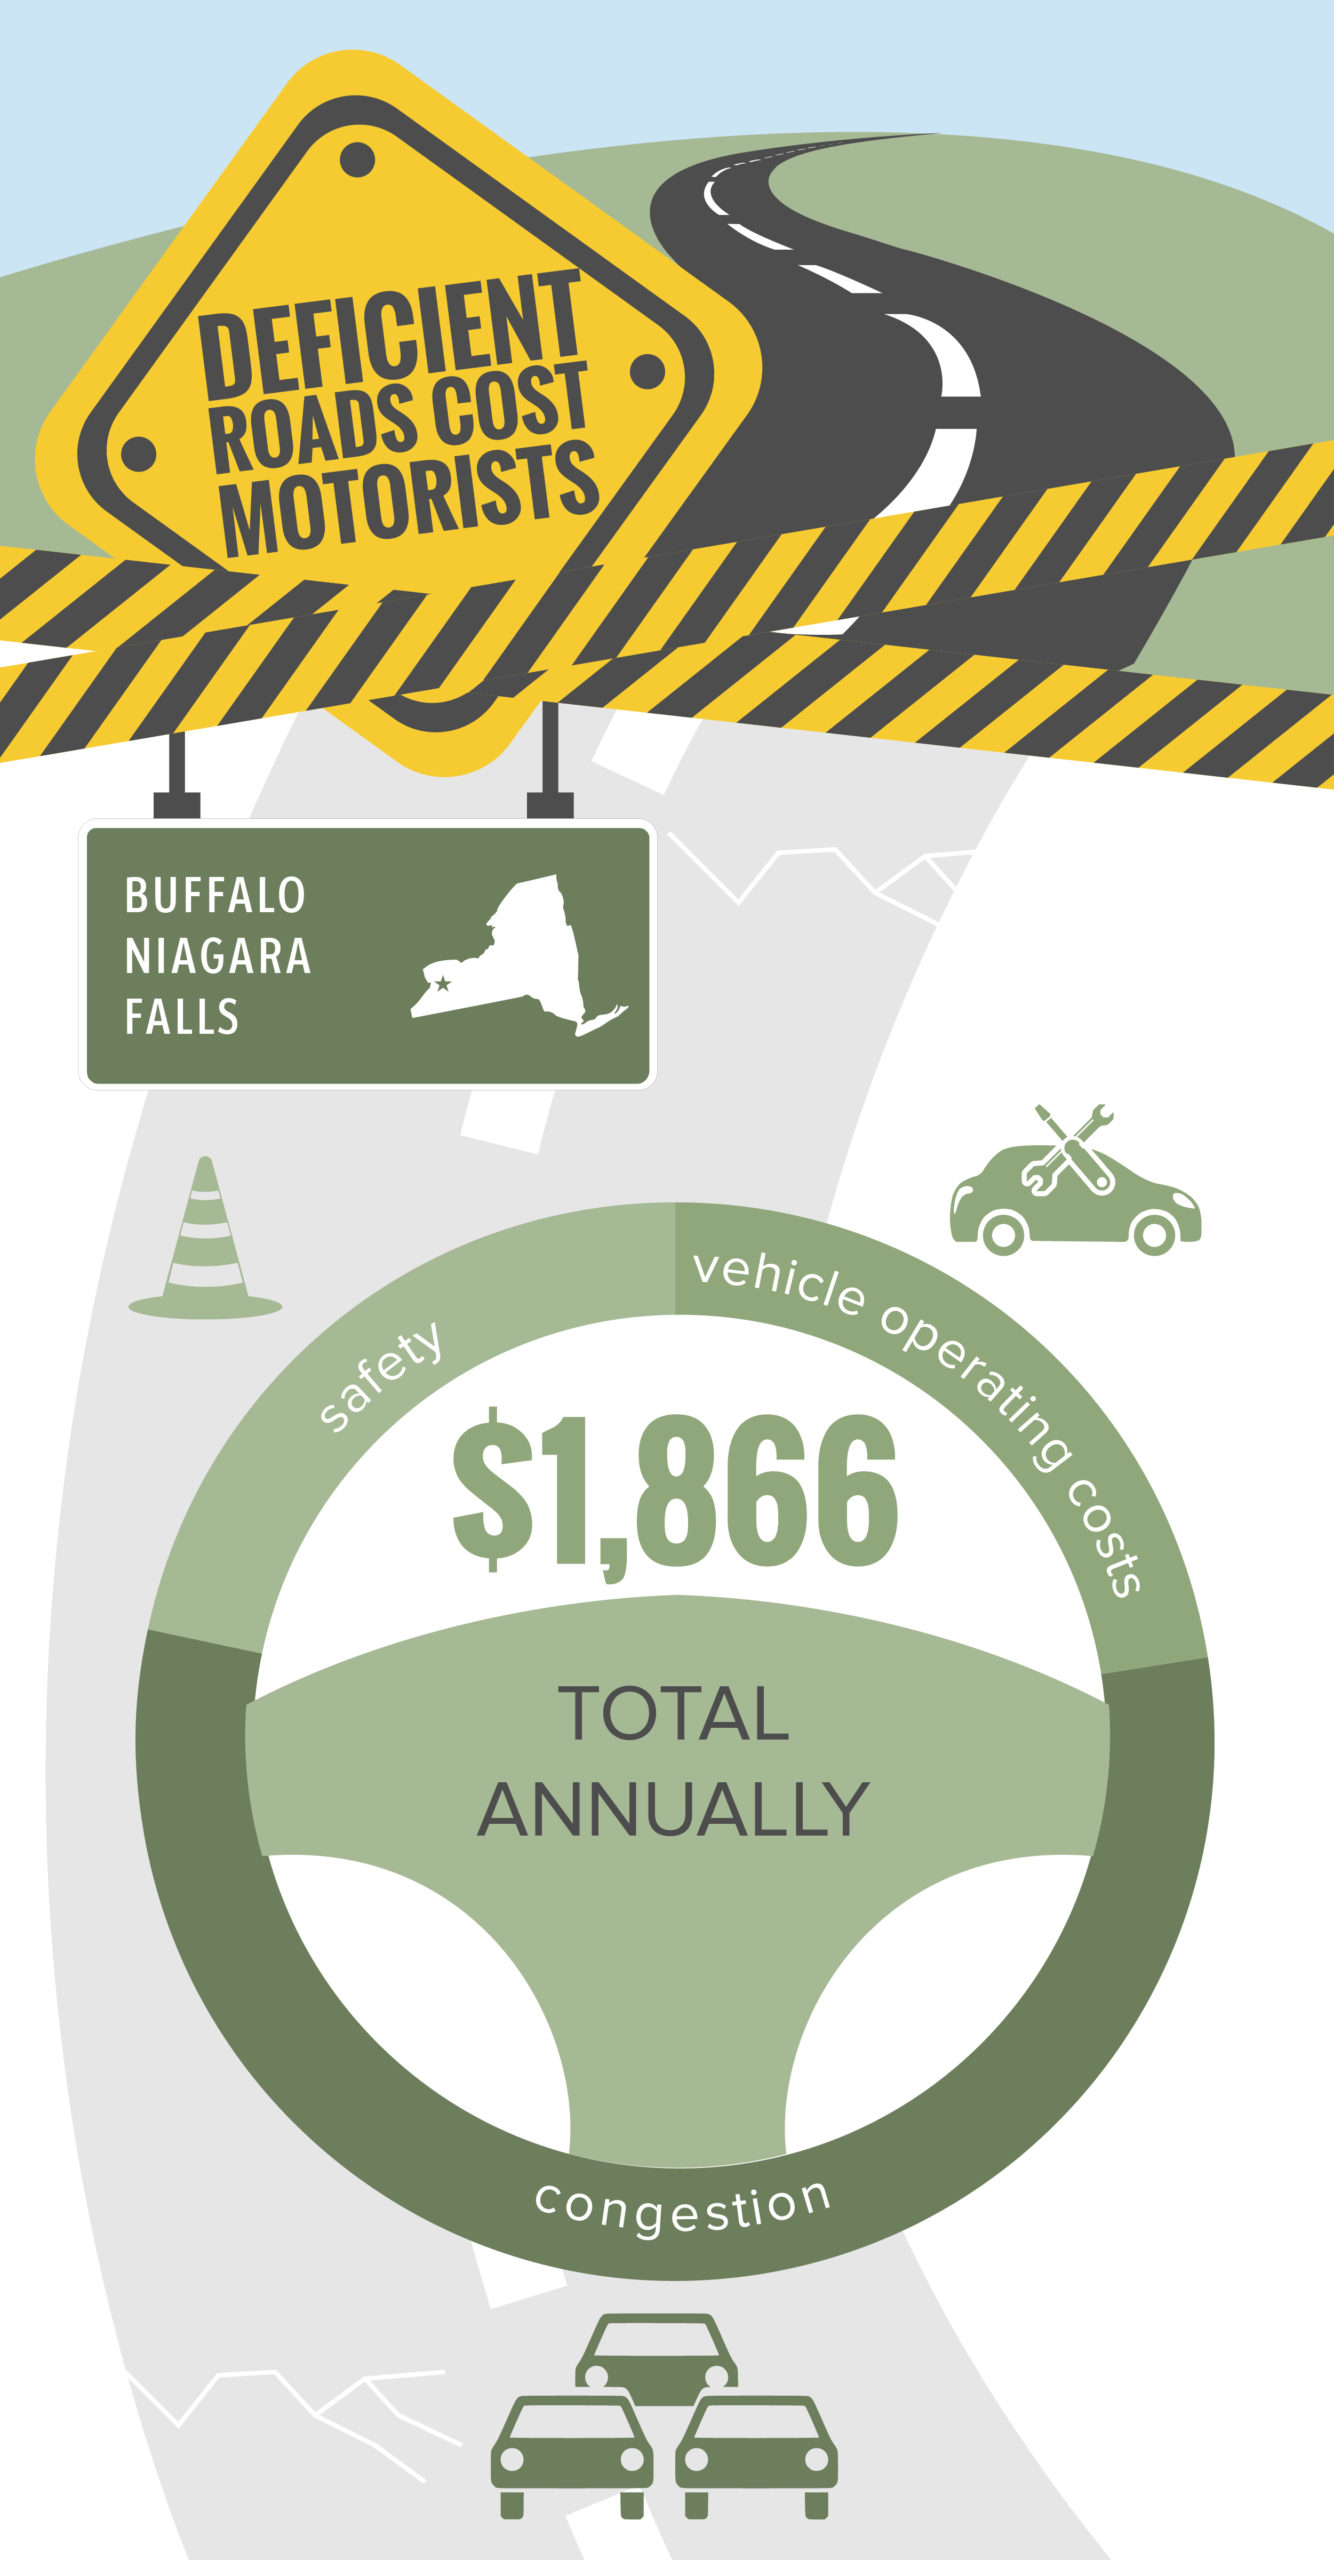 Buffalo-Niagara Falls Deficient Roads Cost to Motorists Infographic – January 2022